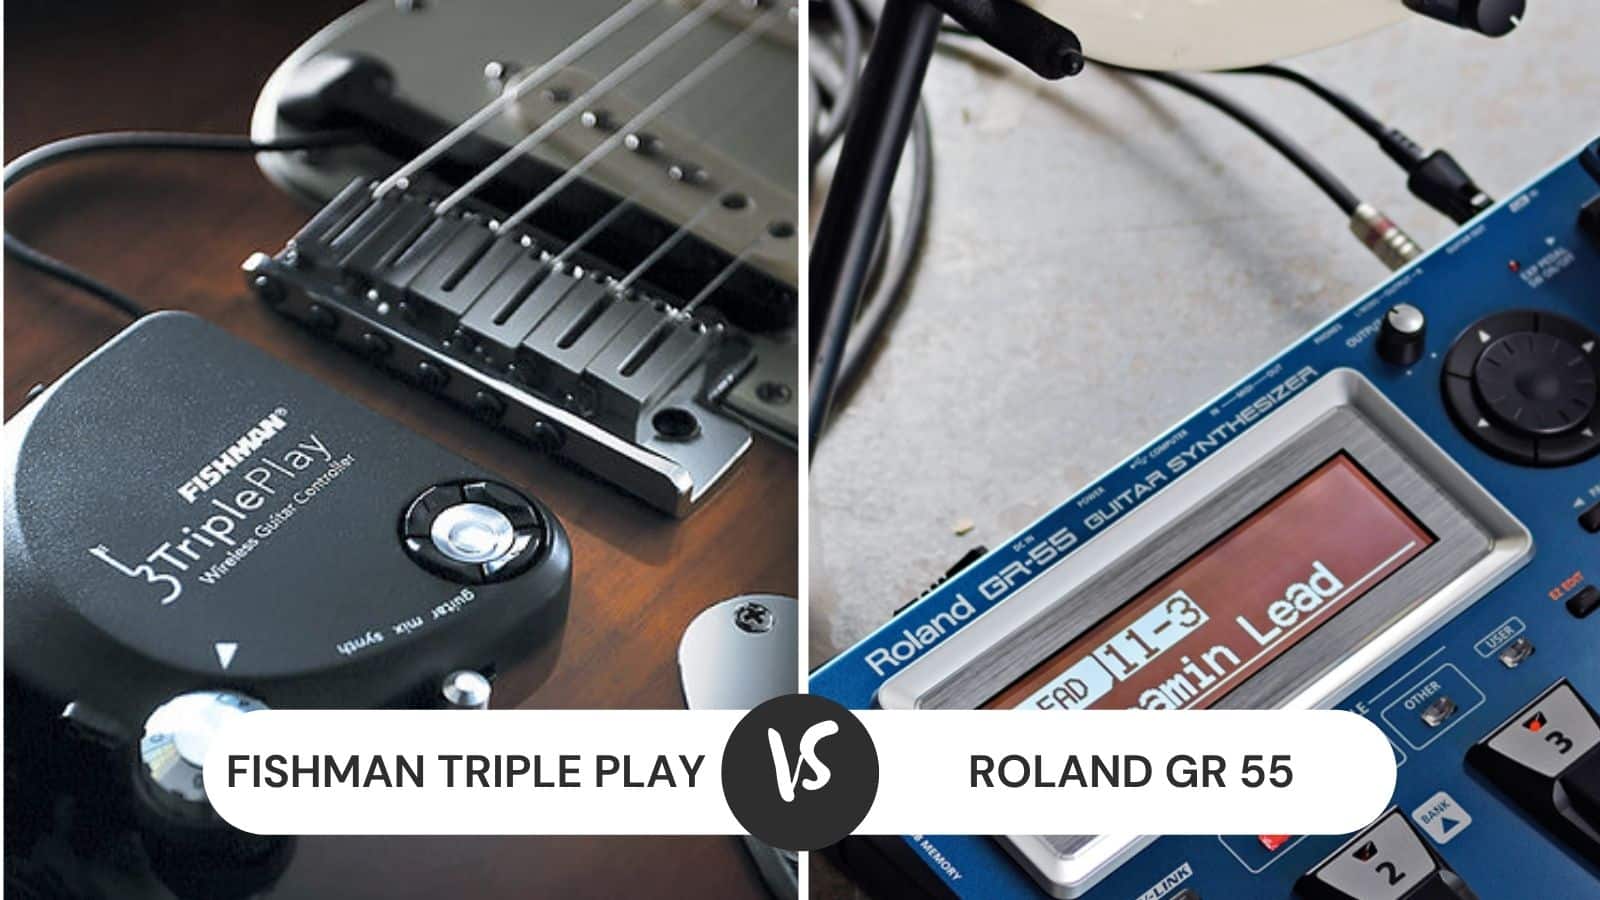 Fishman Triple Play vs Roland GR 55